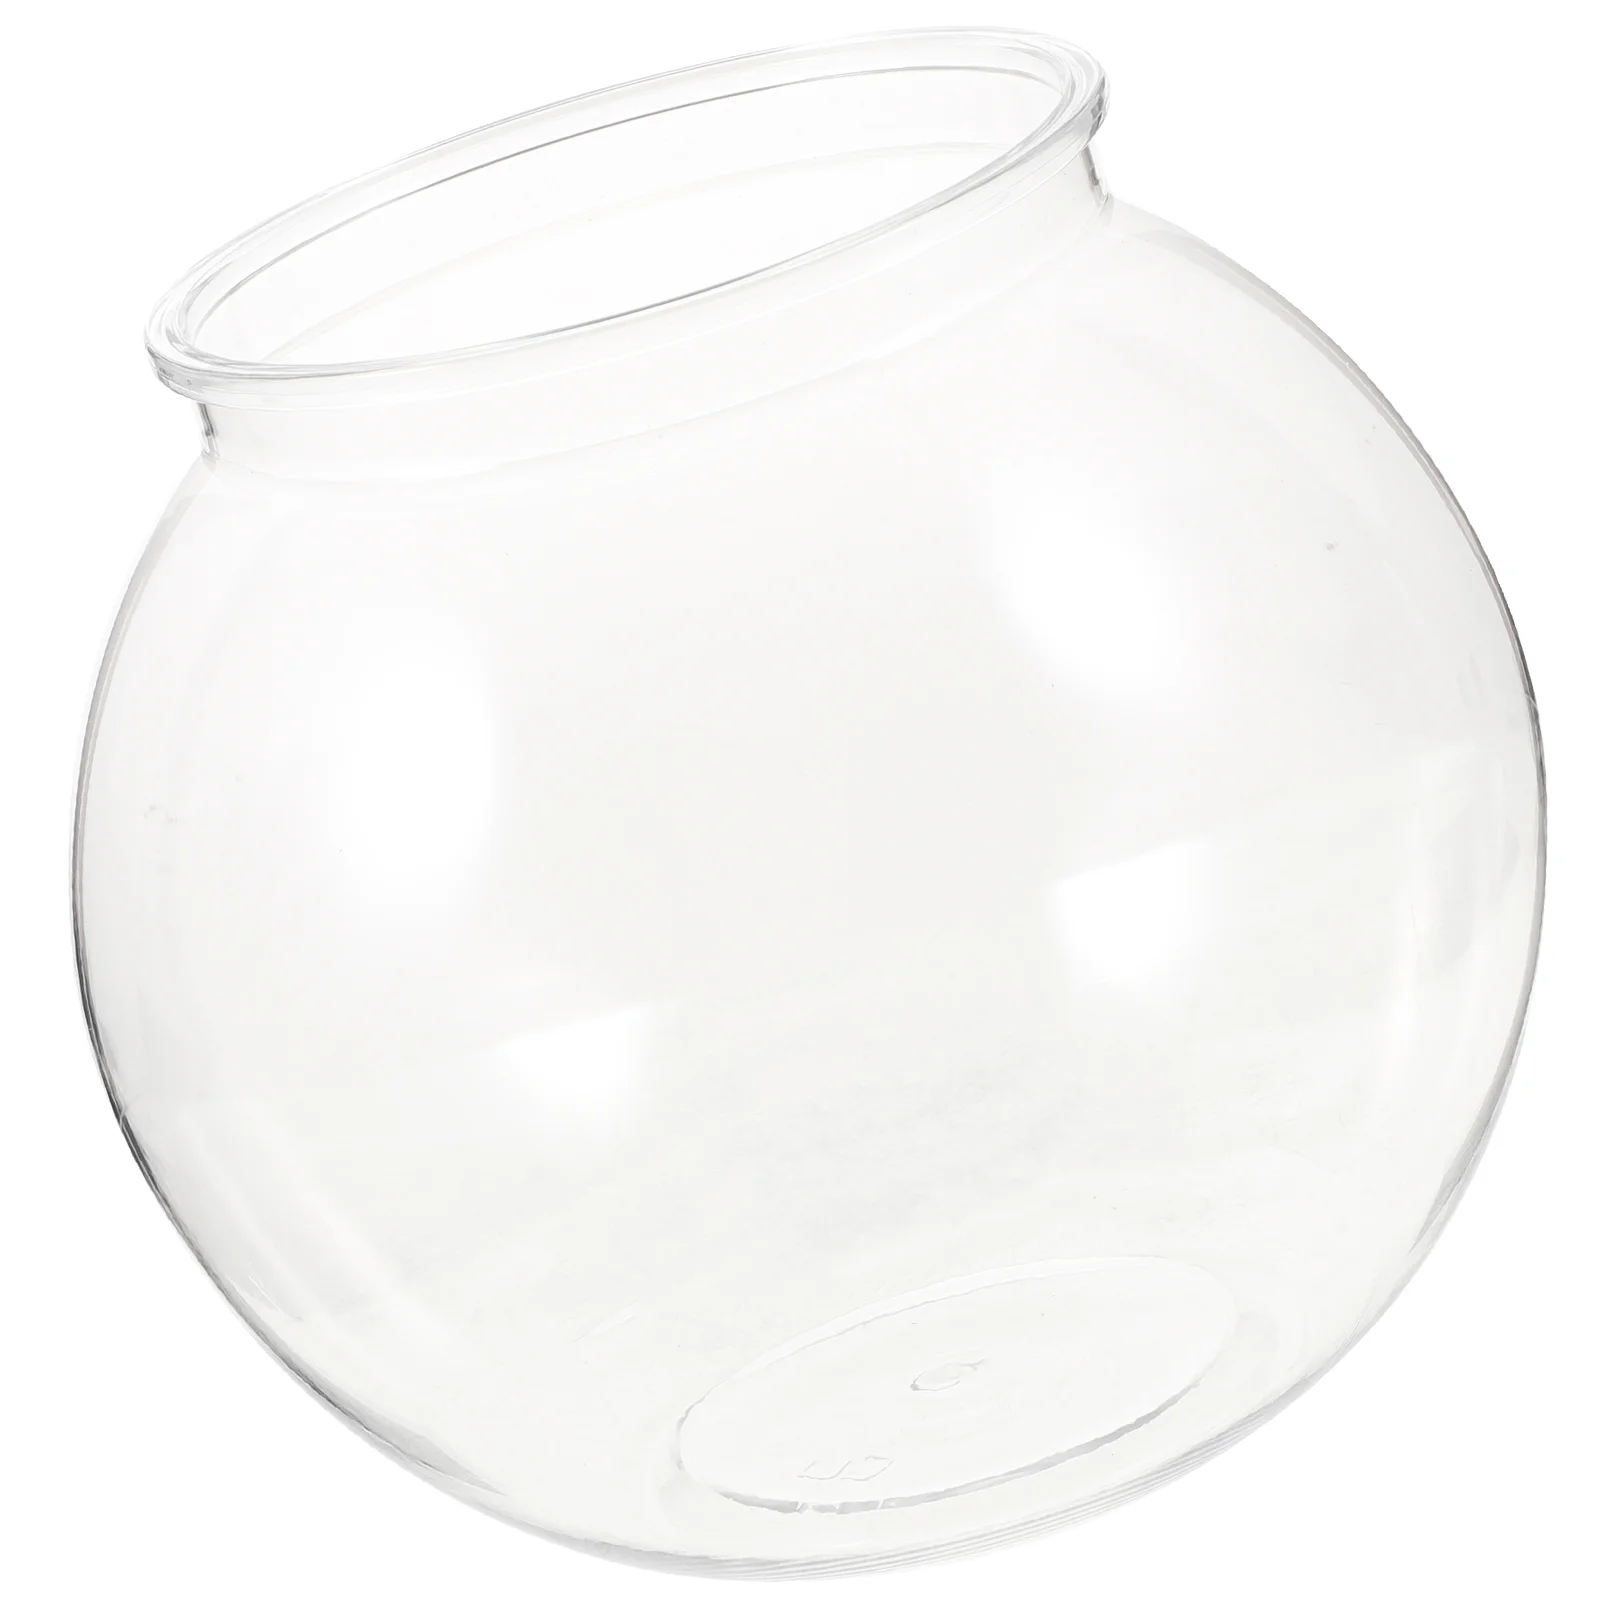 

Bowl Tank Aquarium Bowls Goldfish Betta Gallon Vase Candy Terrarium Globe Desktop Holder Round Vases Flower Mini Fishbowl Clear